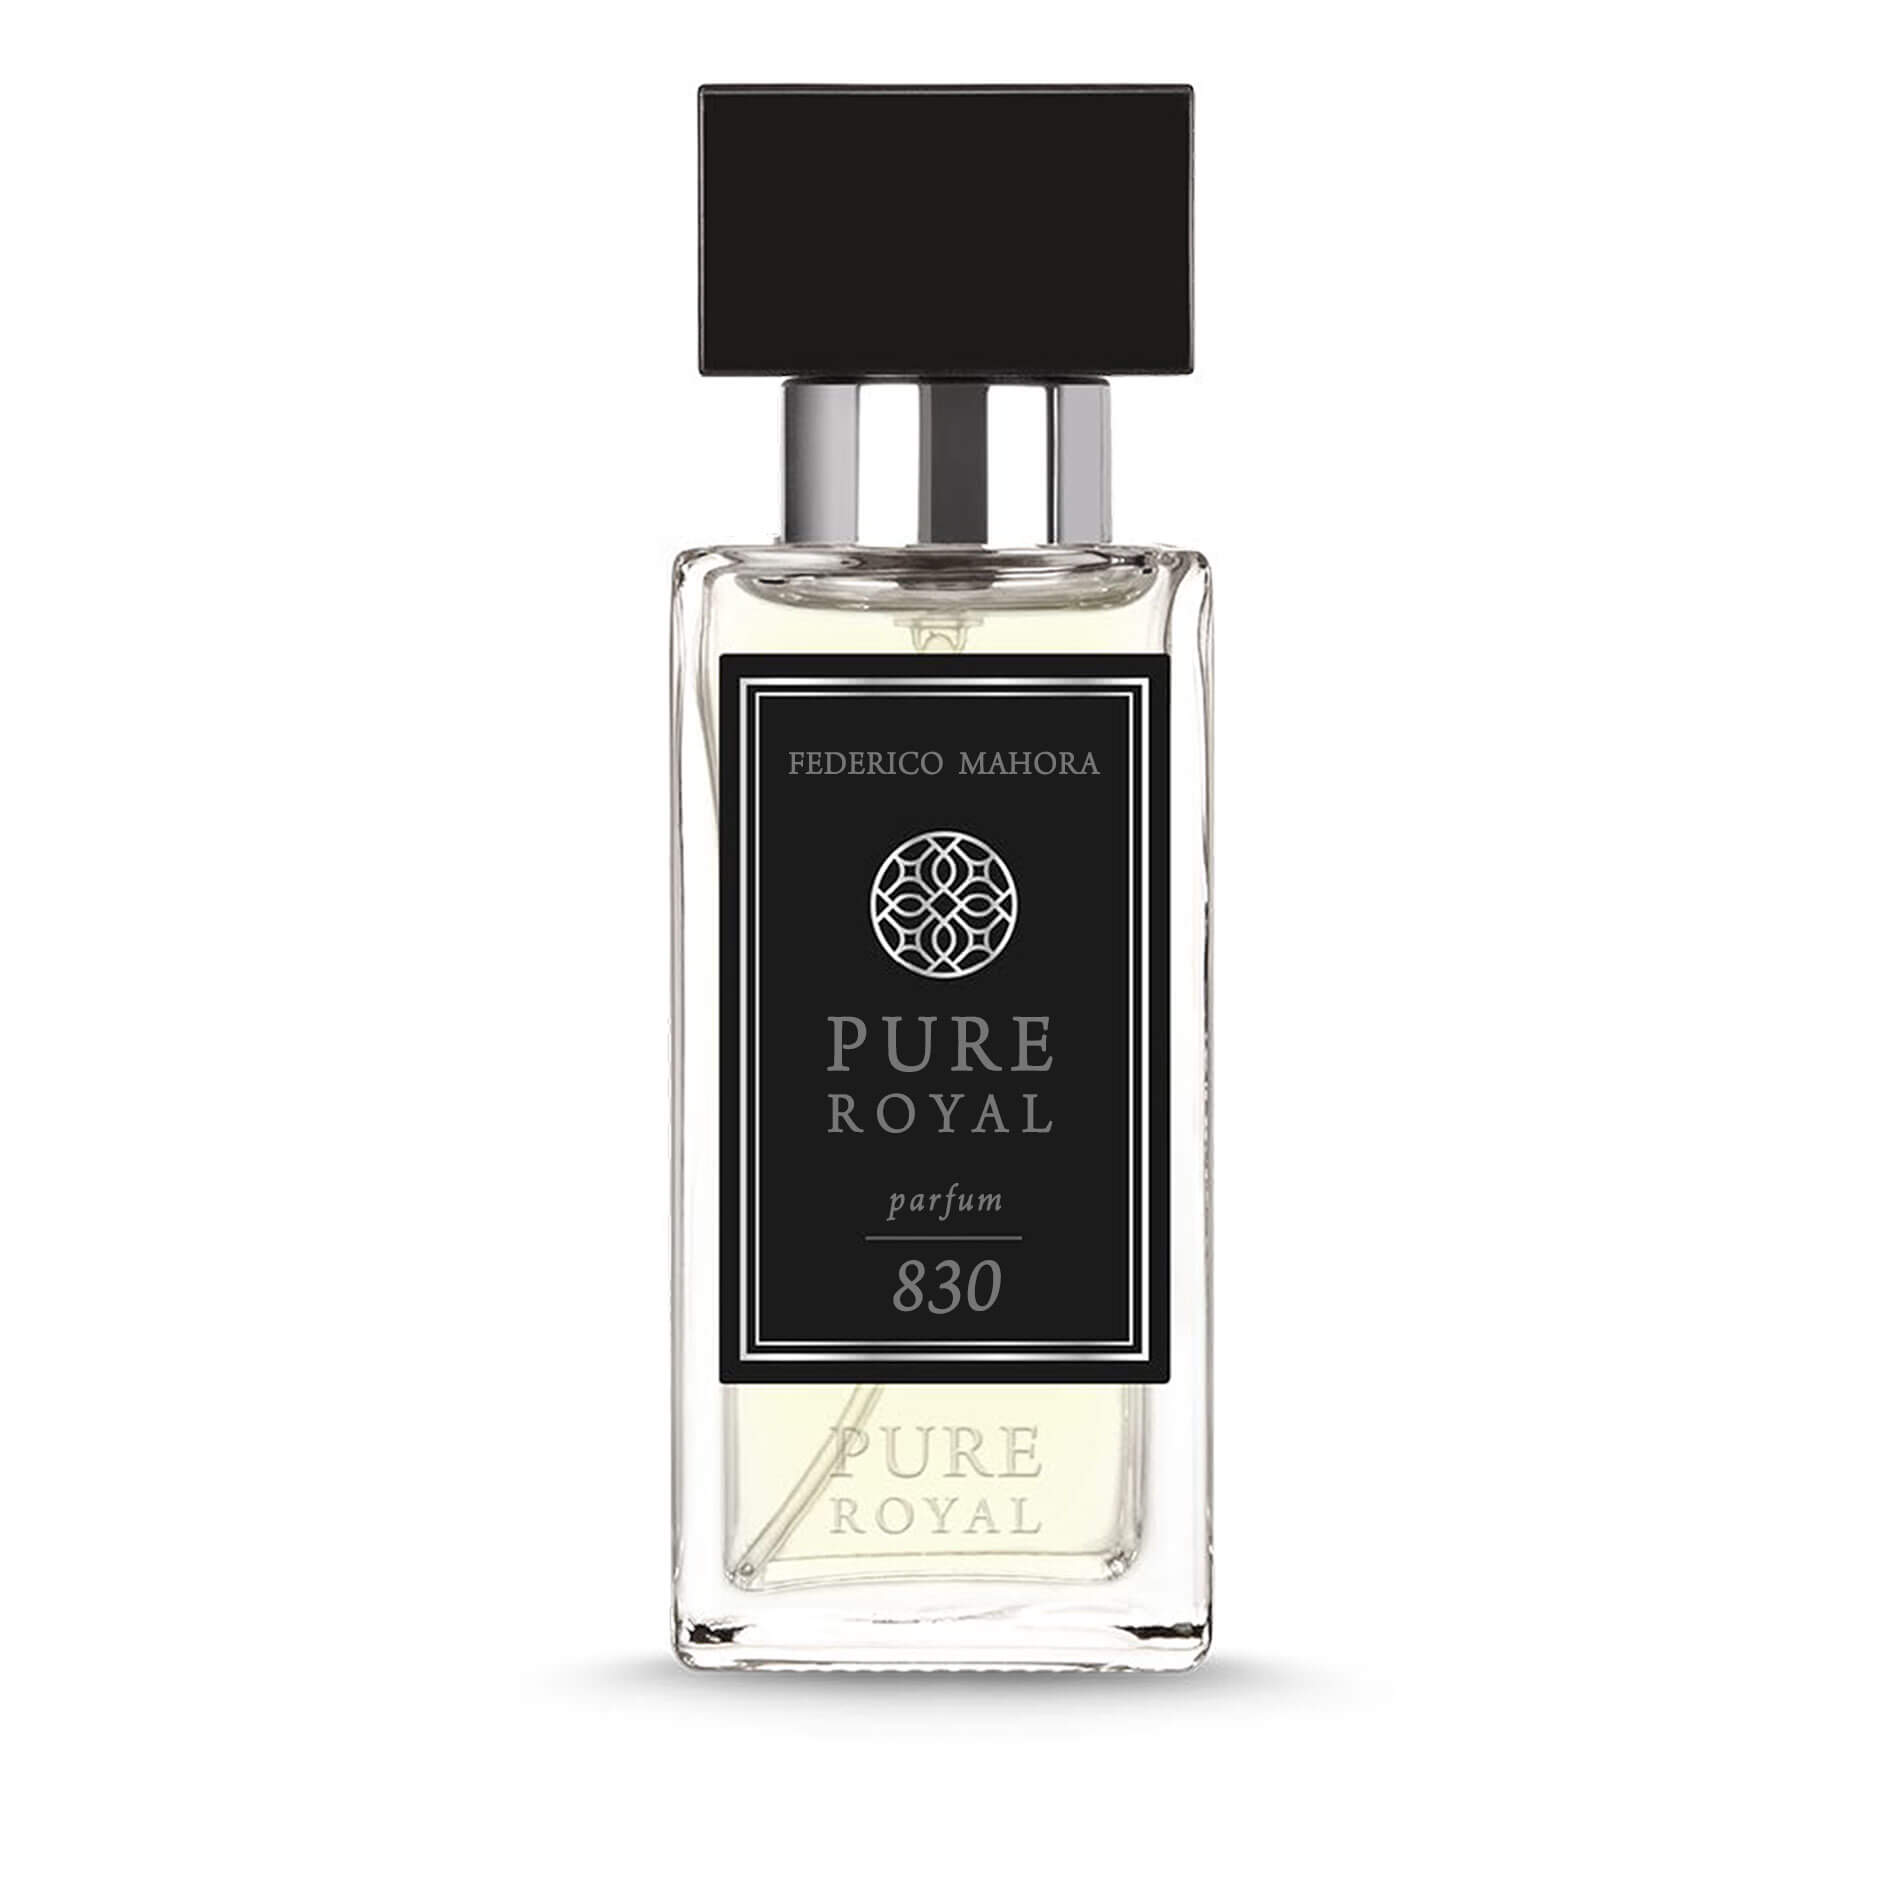 PURE ROYAL 830 Parfum by Federico Mahora